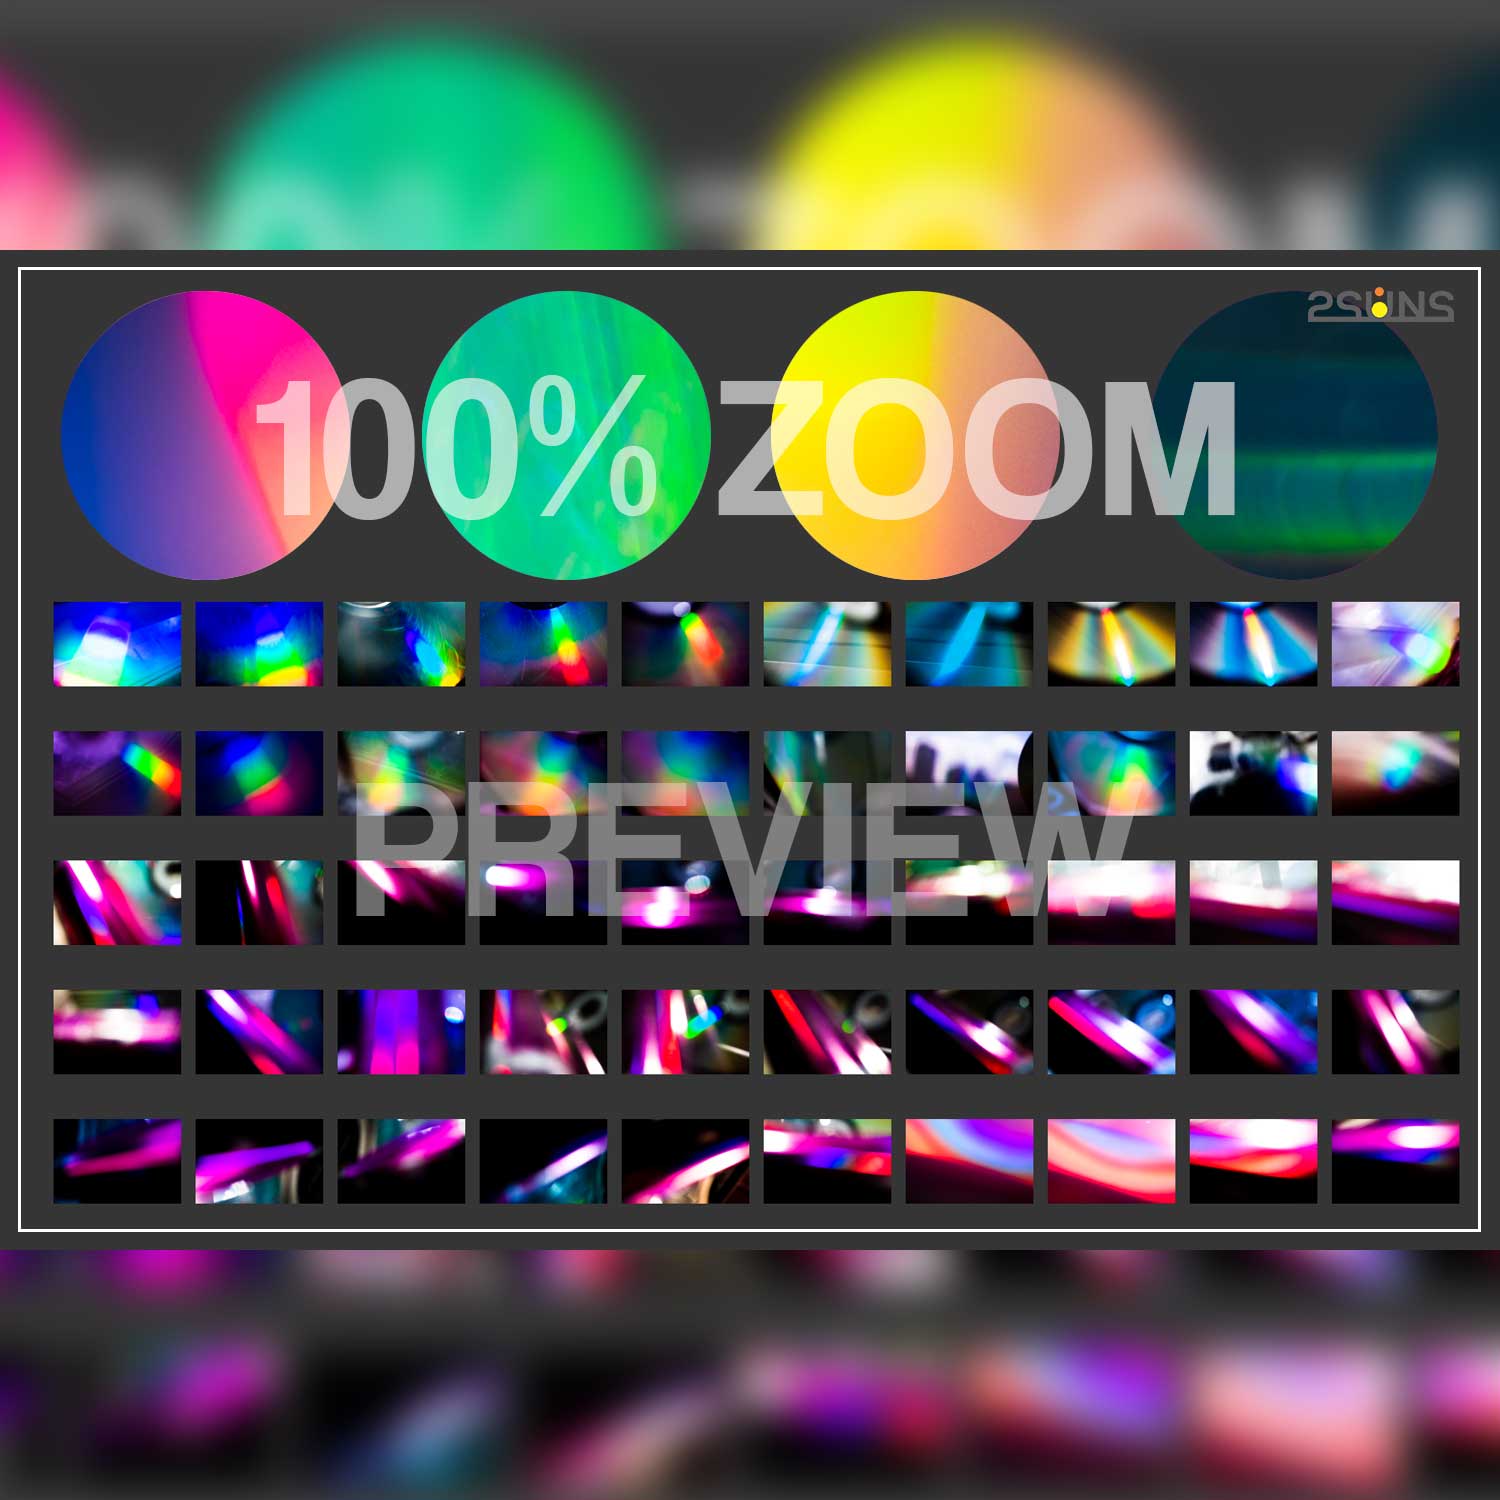 Bokeh Neon Holographic Photo Diamond Overlays Effects Gallery.